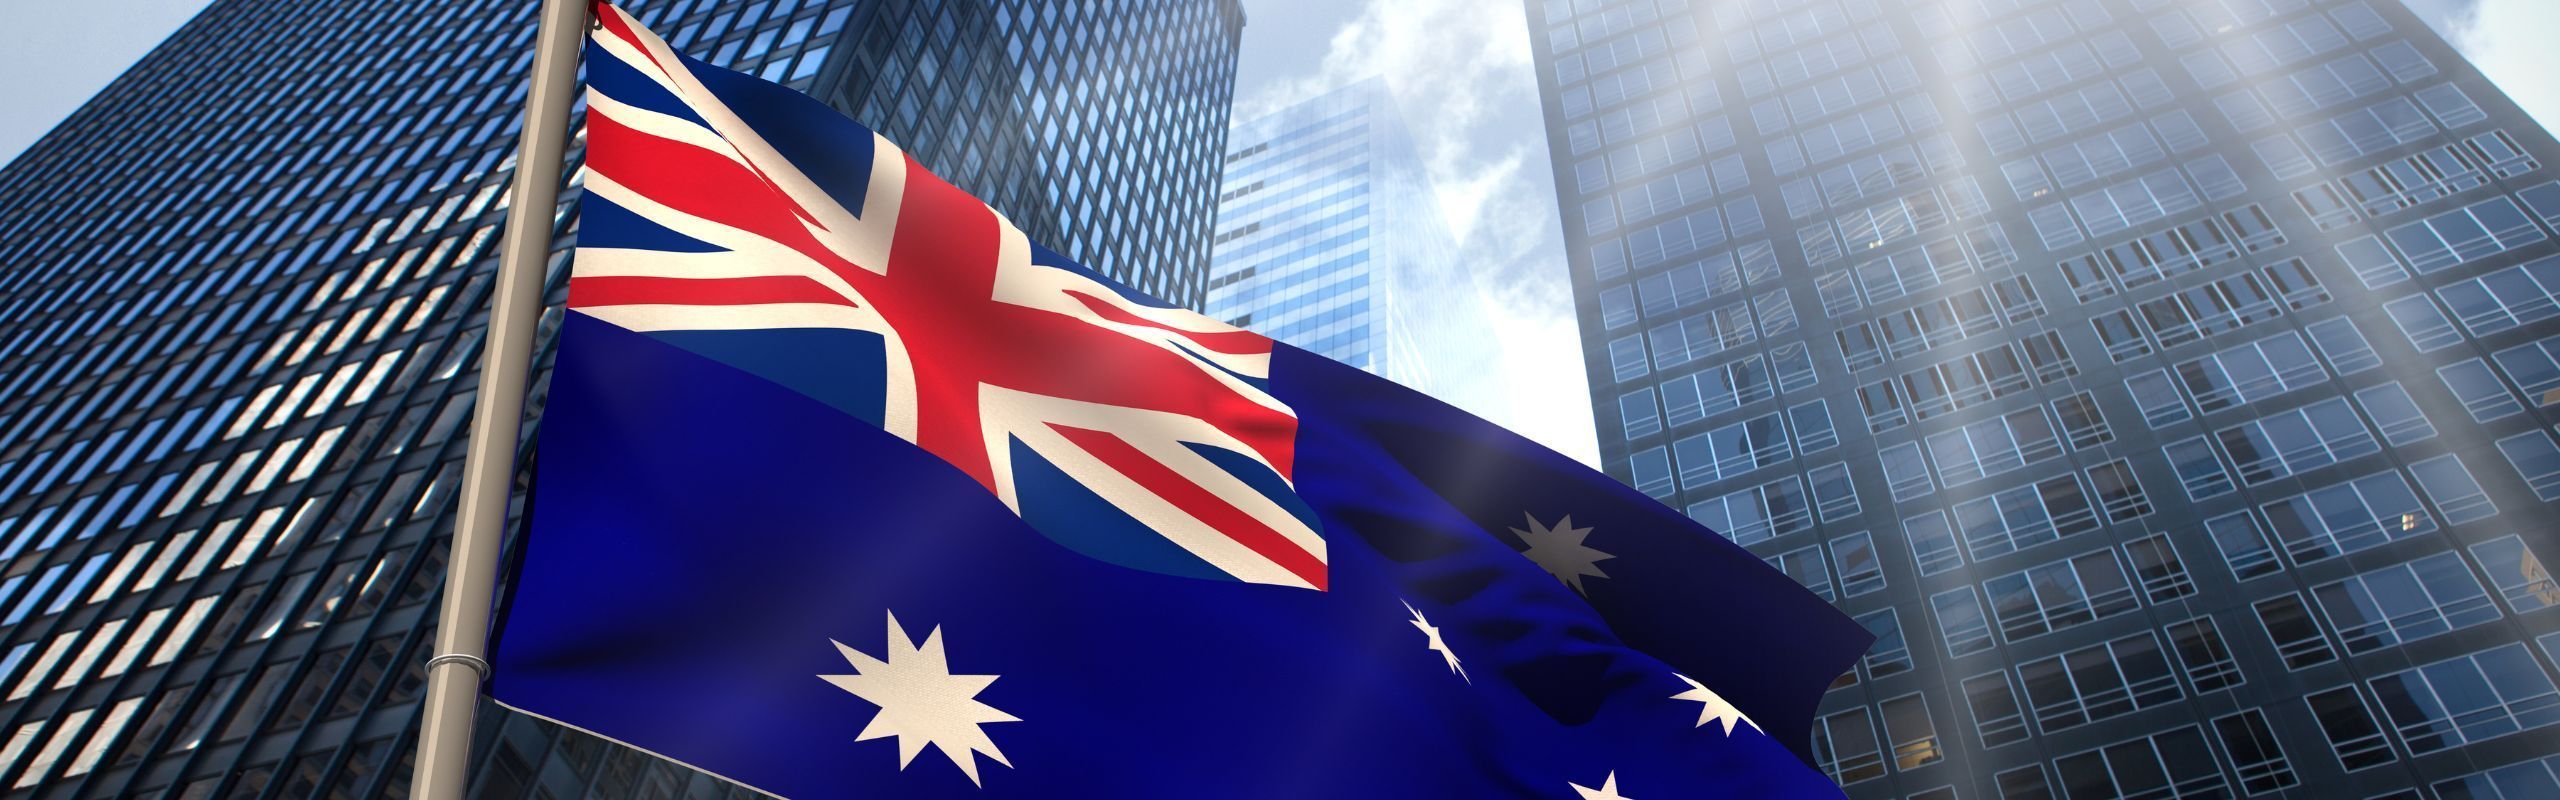 Australia flag and buildings